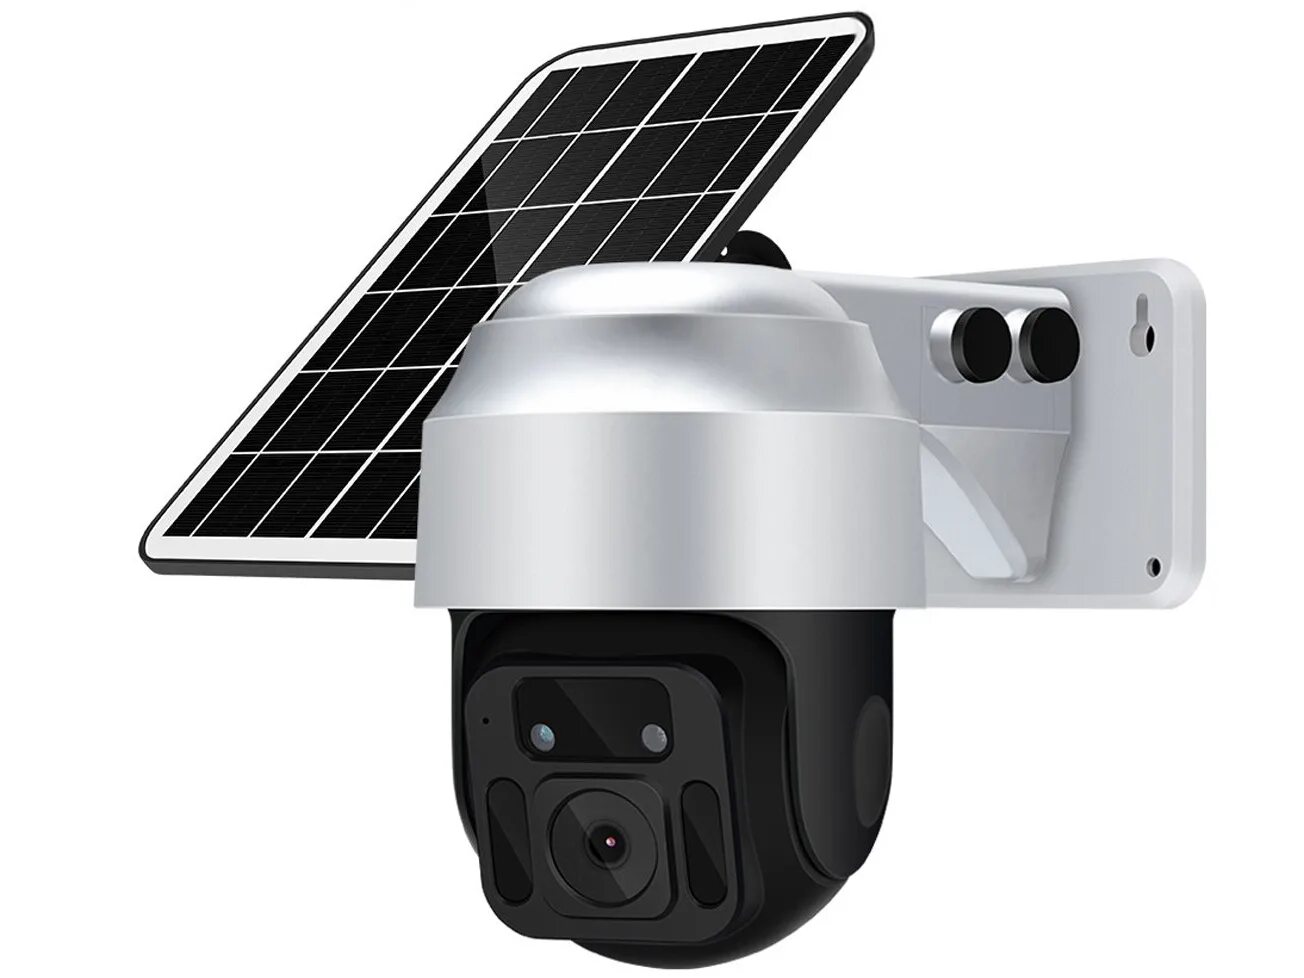 Уличная поворотная 4g камера. Камера с солнечной батареей 4g. Камера link Solar. Поворотная автономная видеокамера Gadian 4g. Камера видеонаблюдения vrt-vc9-4g автономная 4g камера uzb.